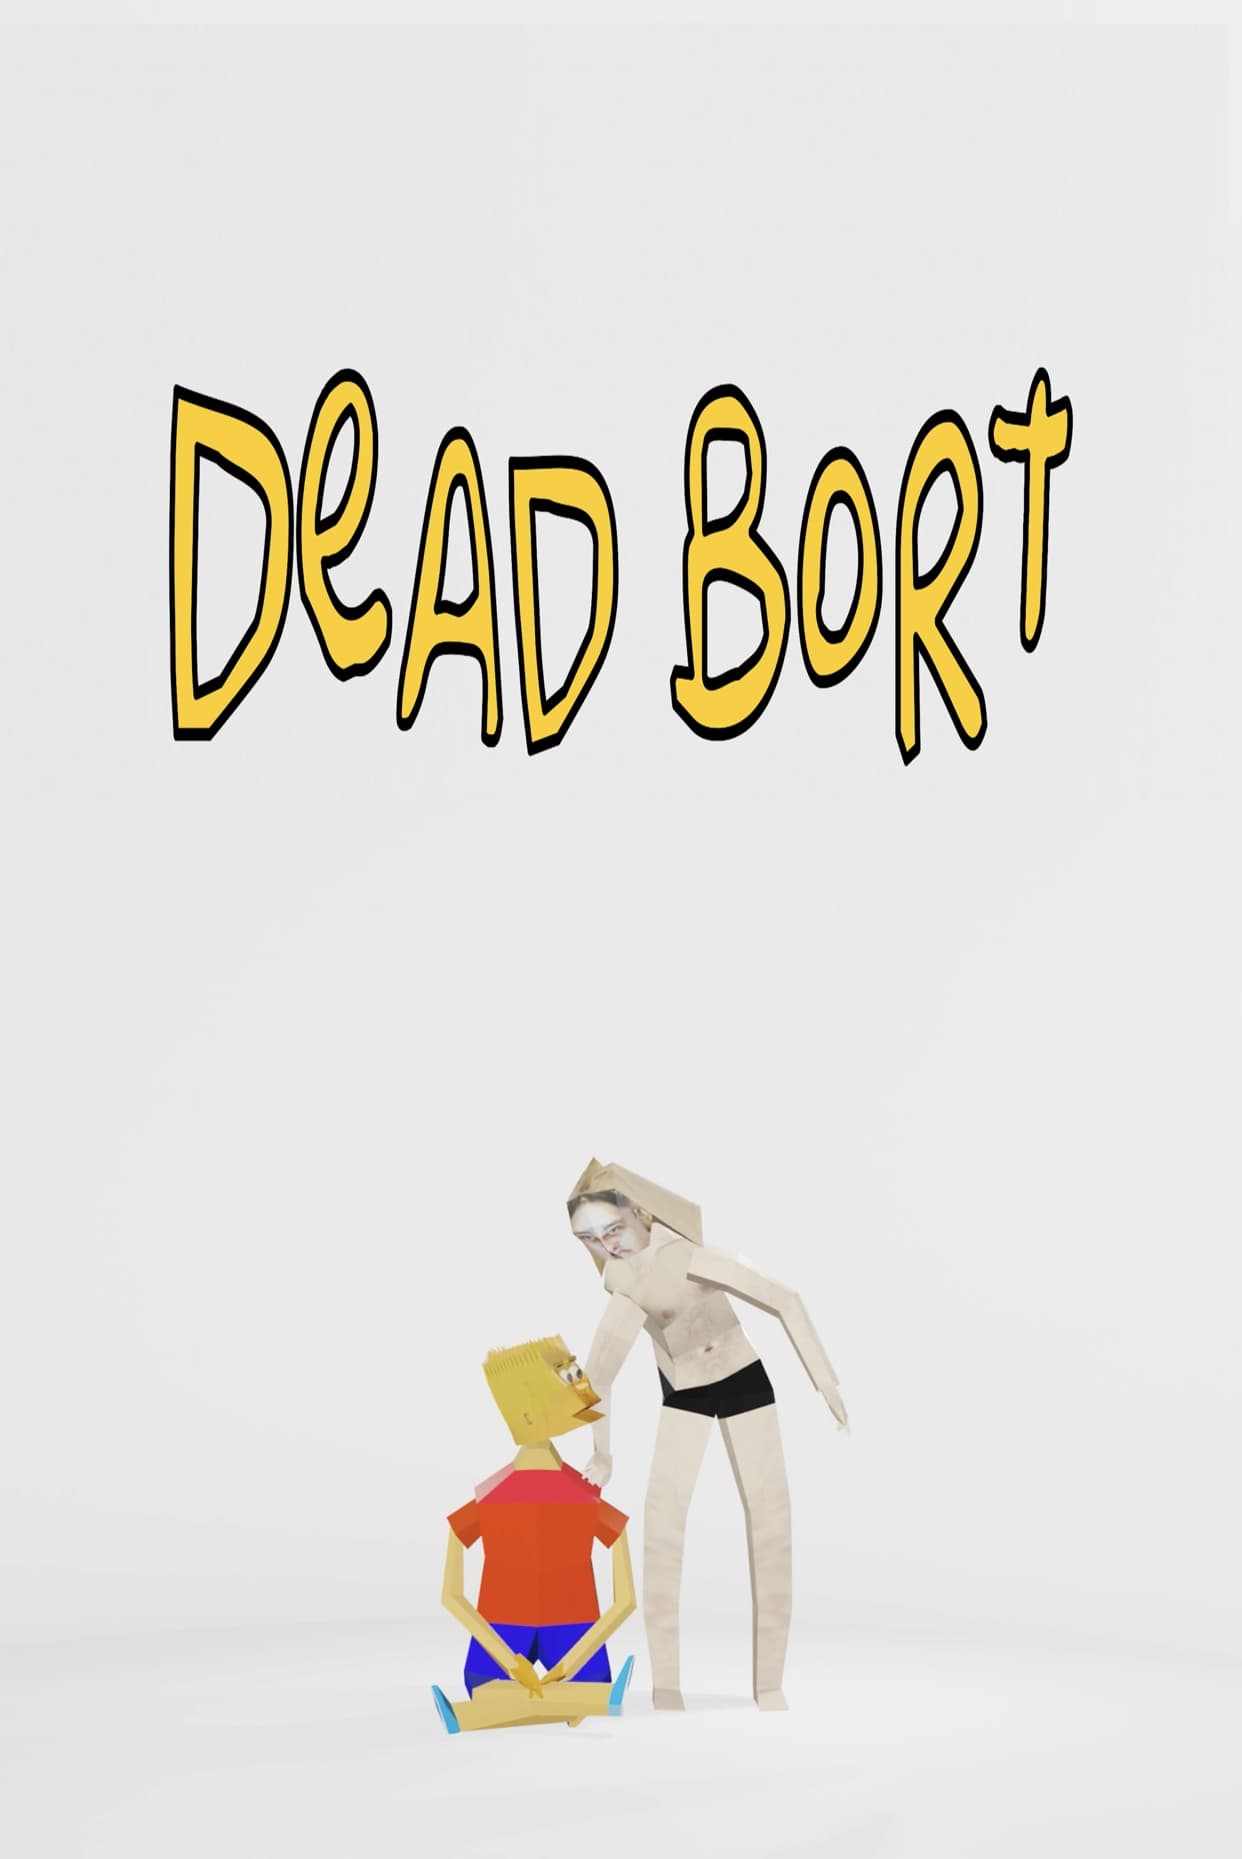 Dead Bort